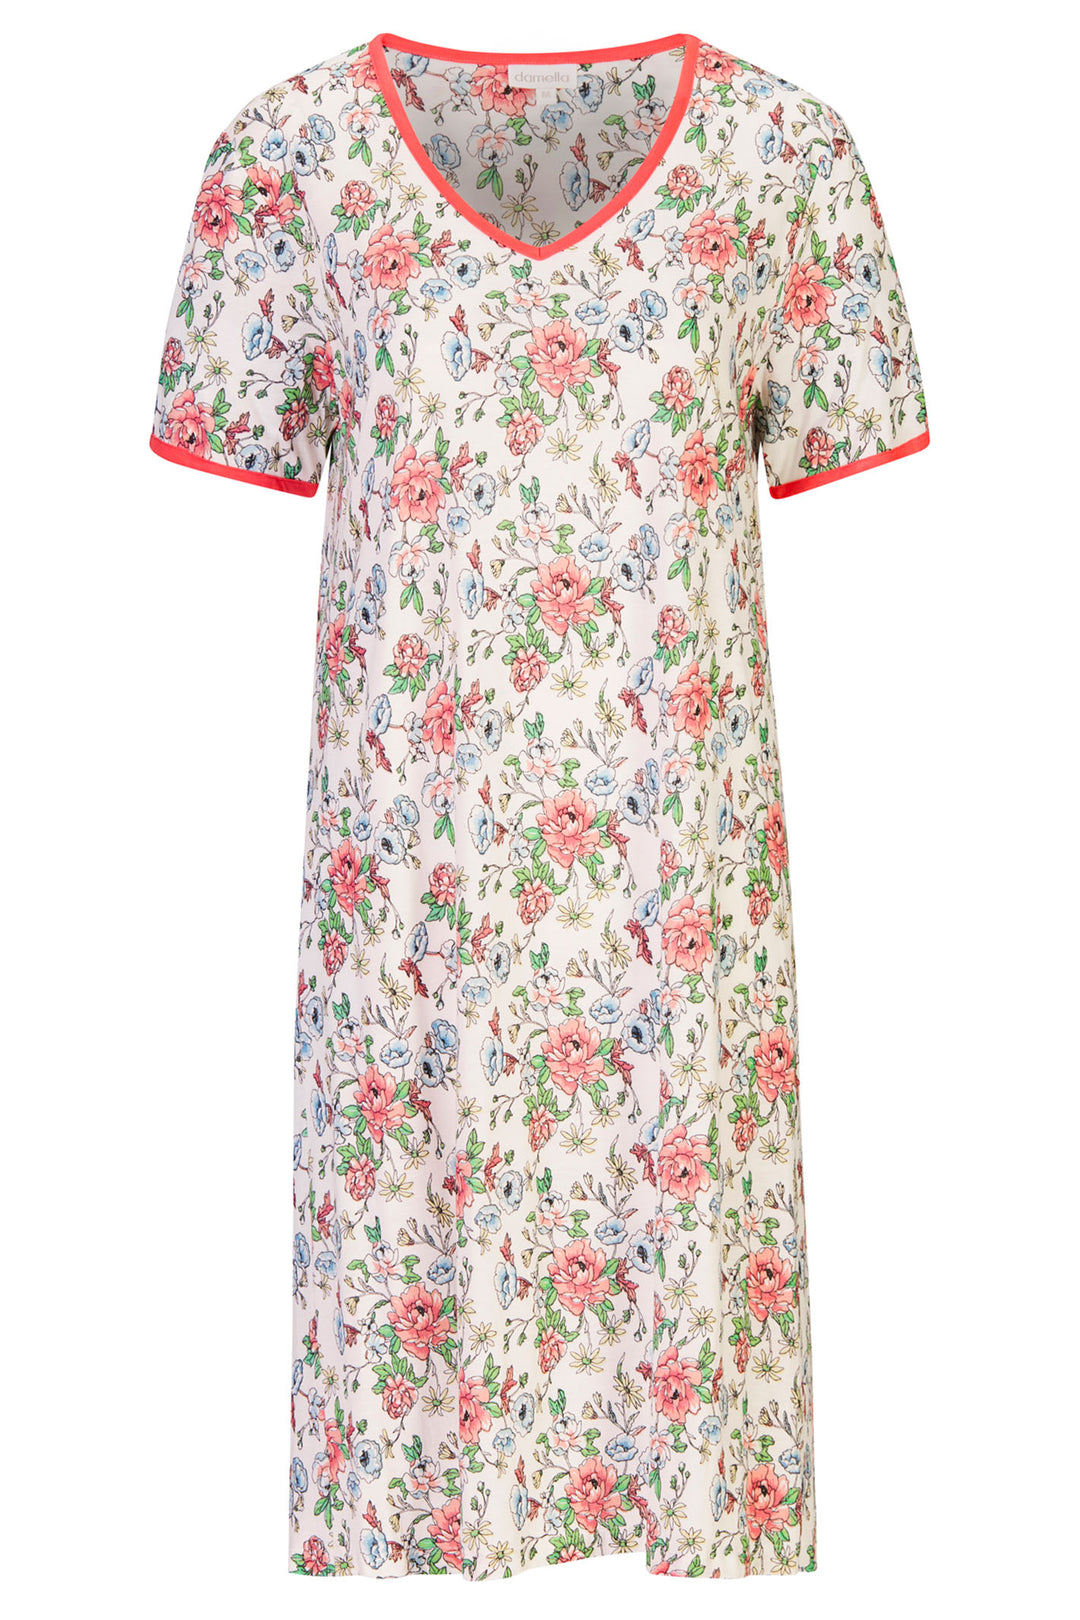 Damella 69982 223 V-Neck White Floral Nightdress - Shirley Allum Boutique